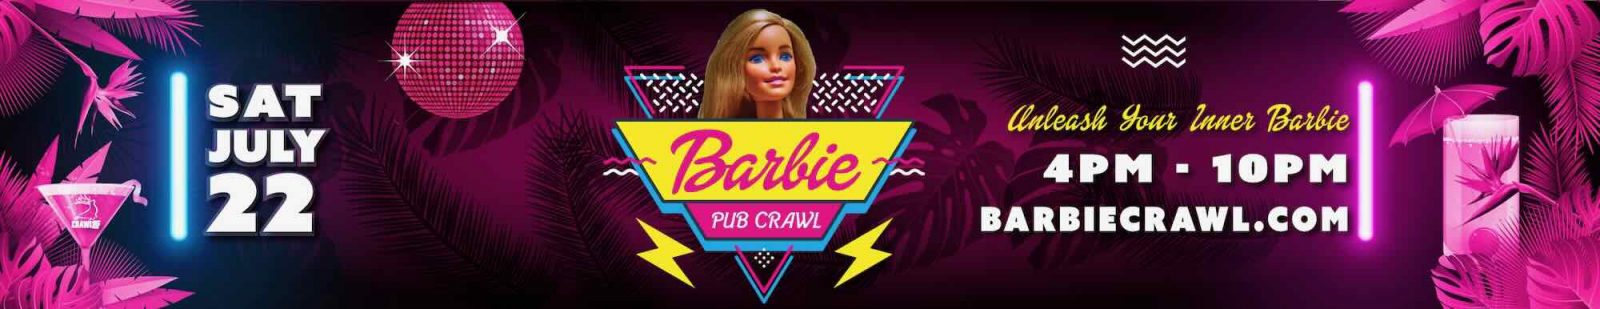 Barbie Pub Crawl San Francisco Banner